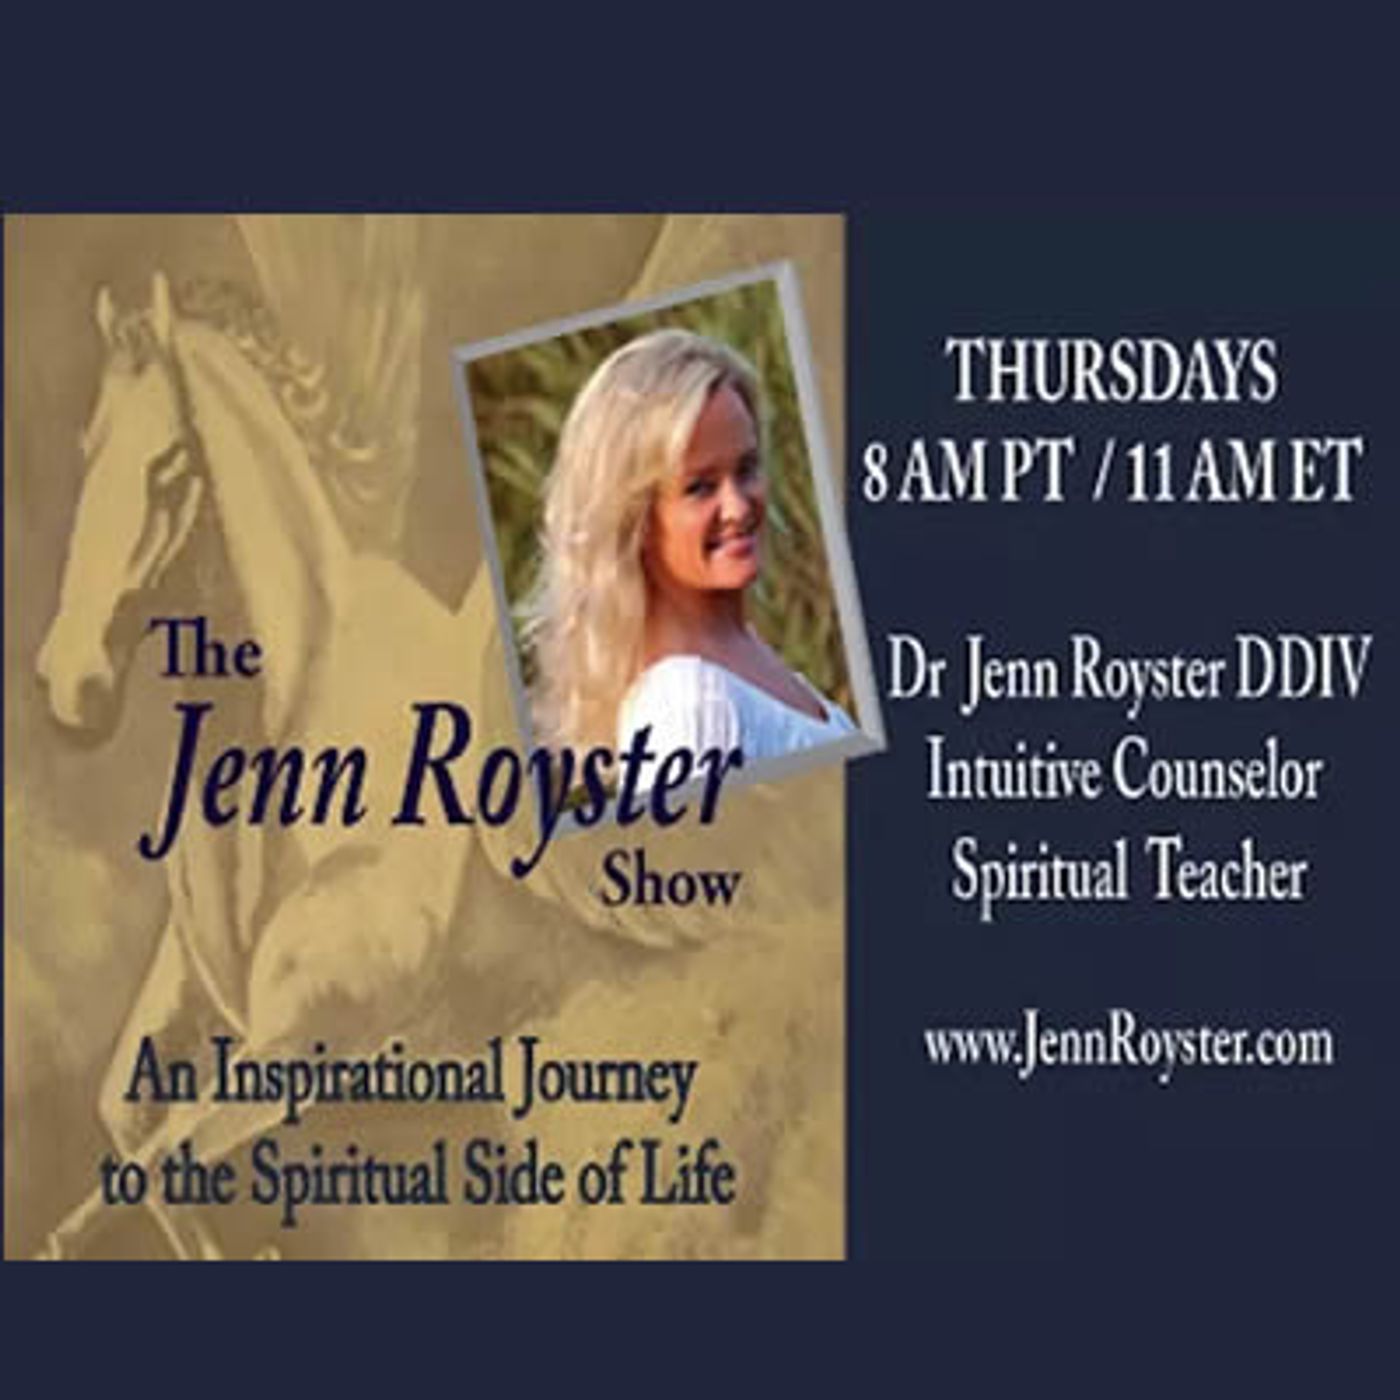 The Jenn Royster Show